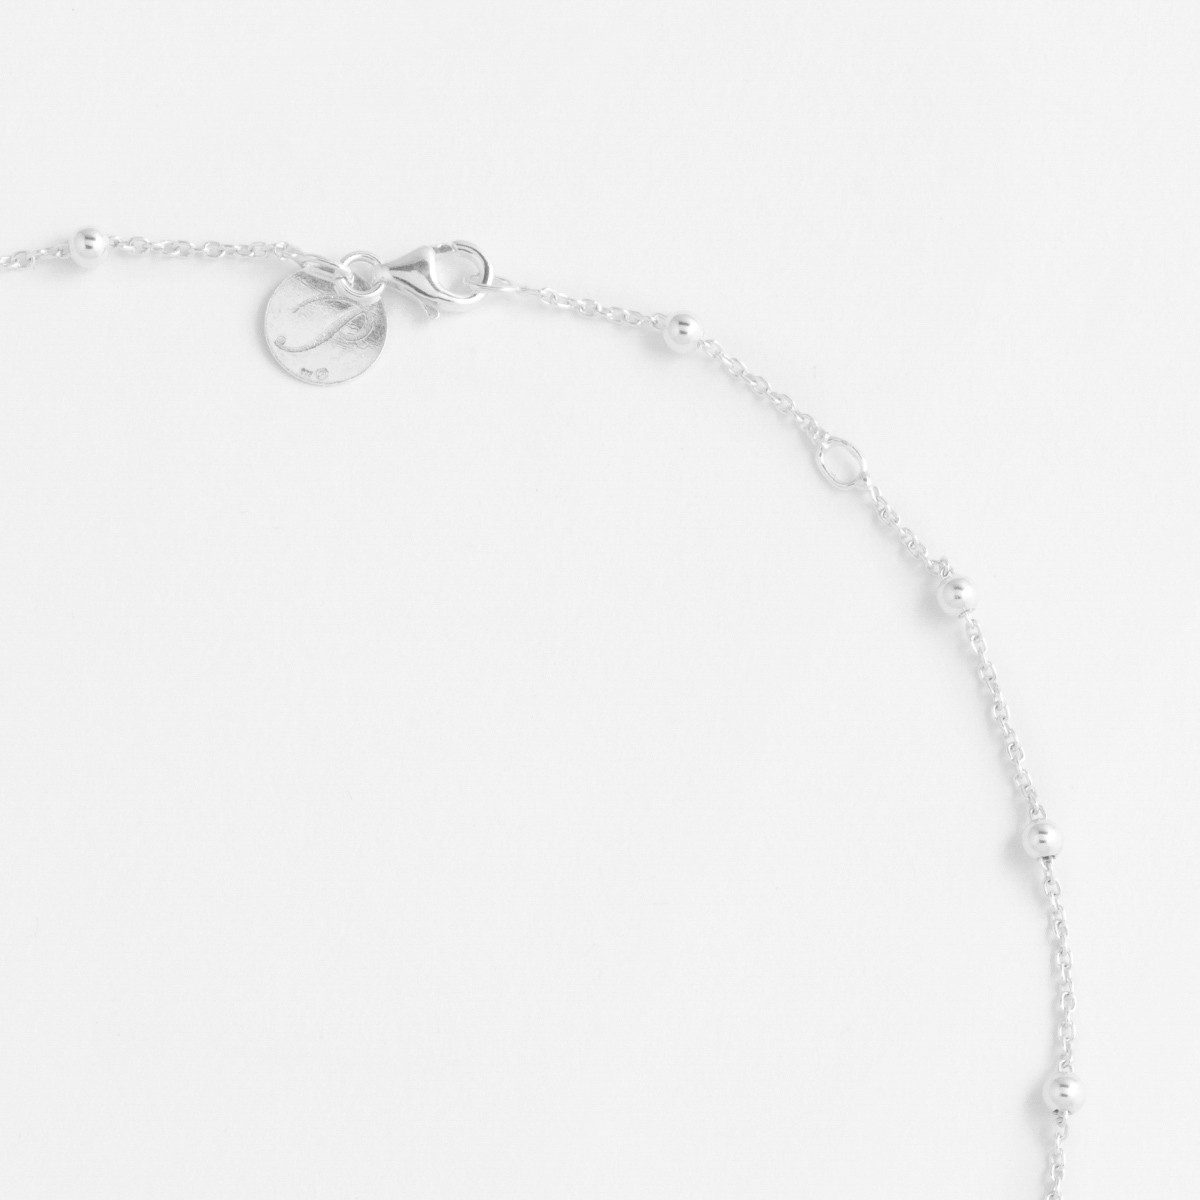 Anchor ball chain - Halsketten - Silber